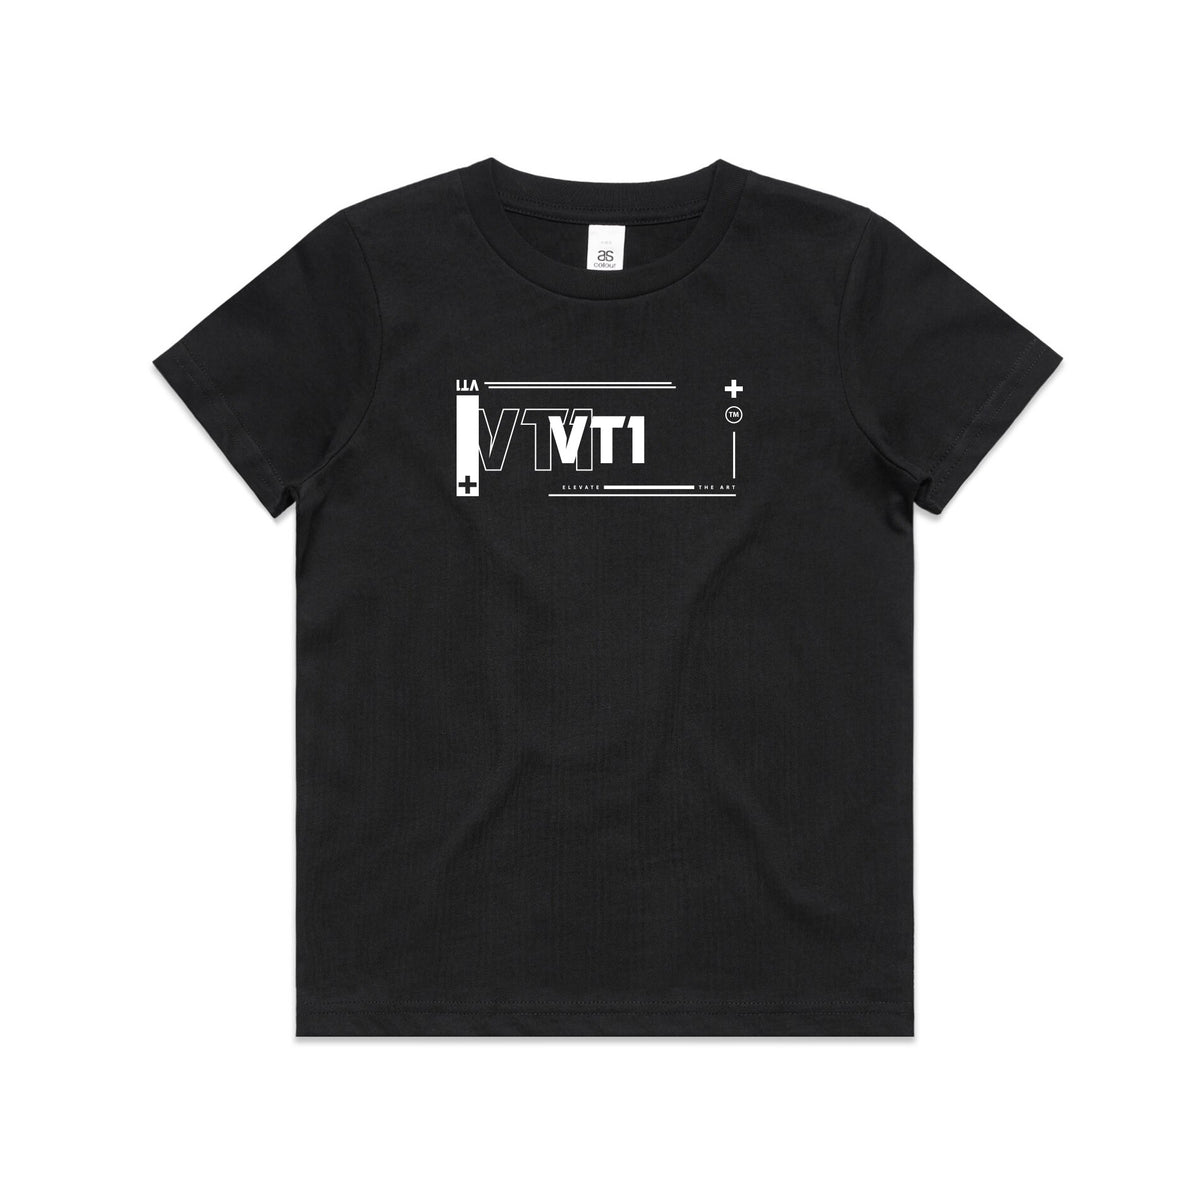 VT1 TechMark Print T-Shirt - Youth